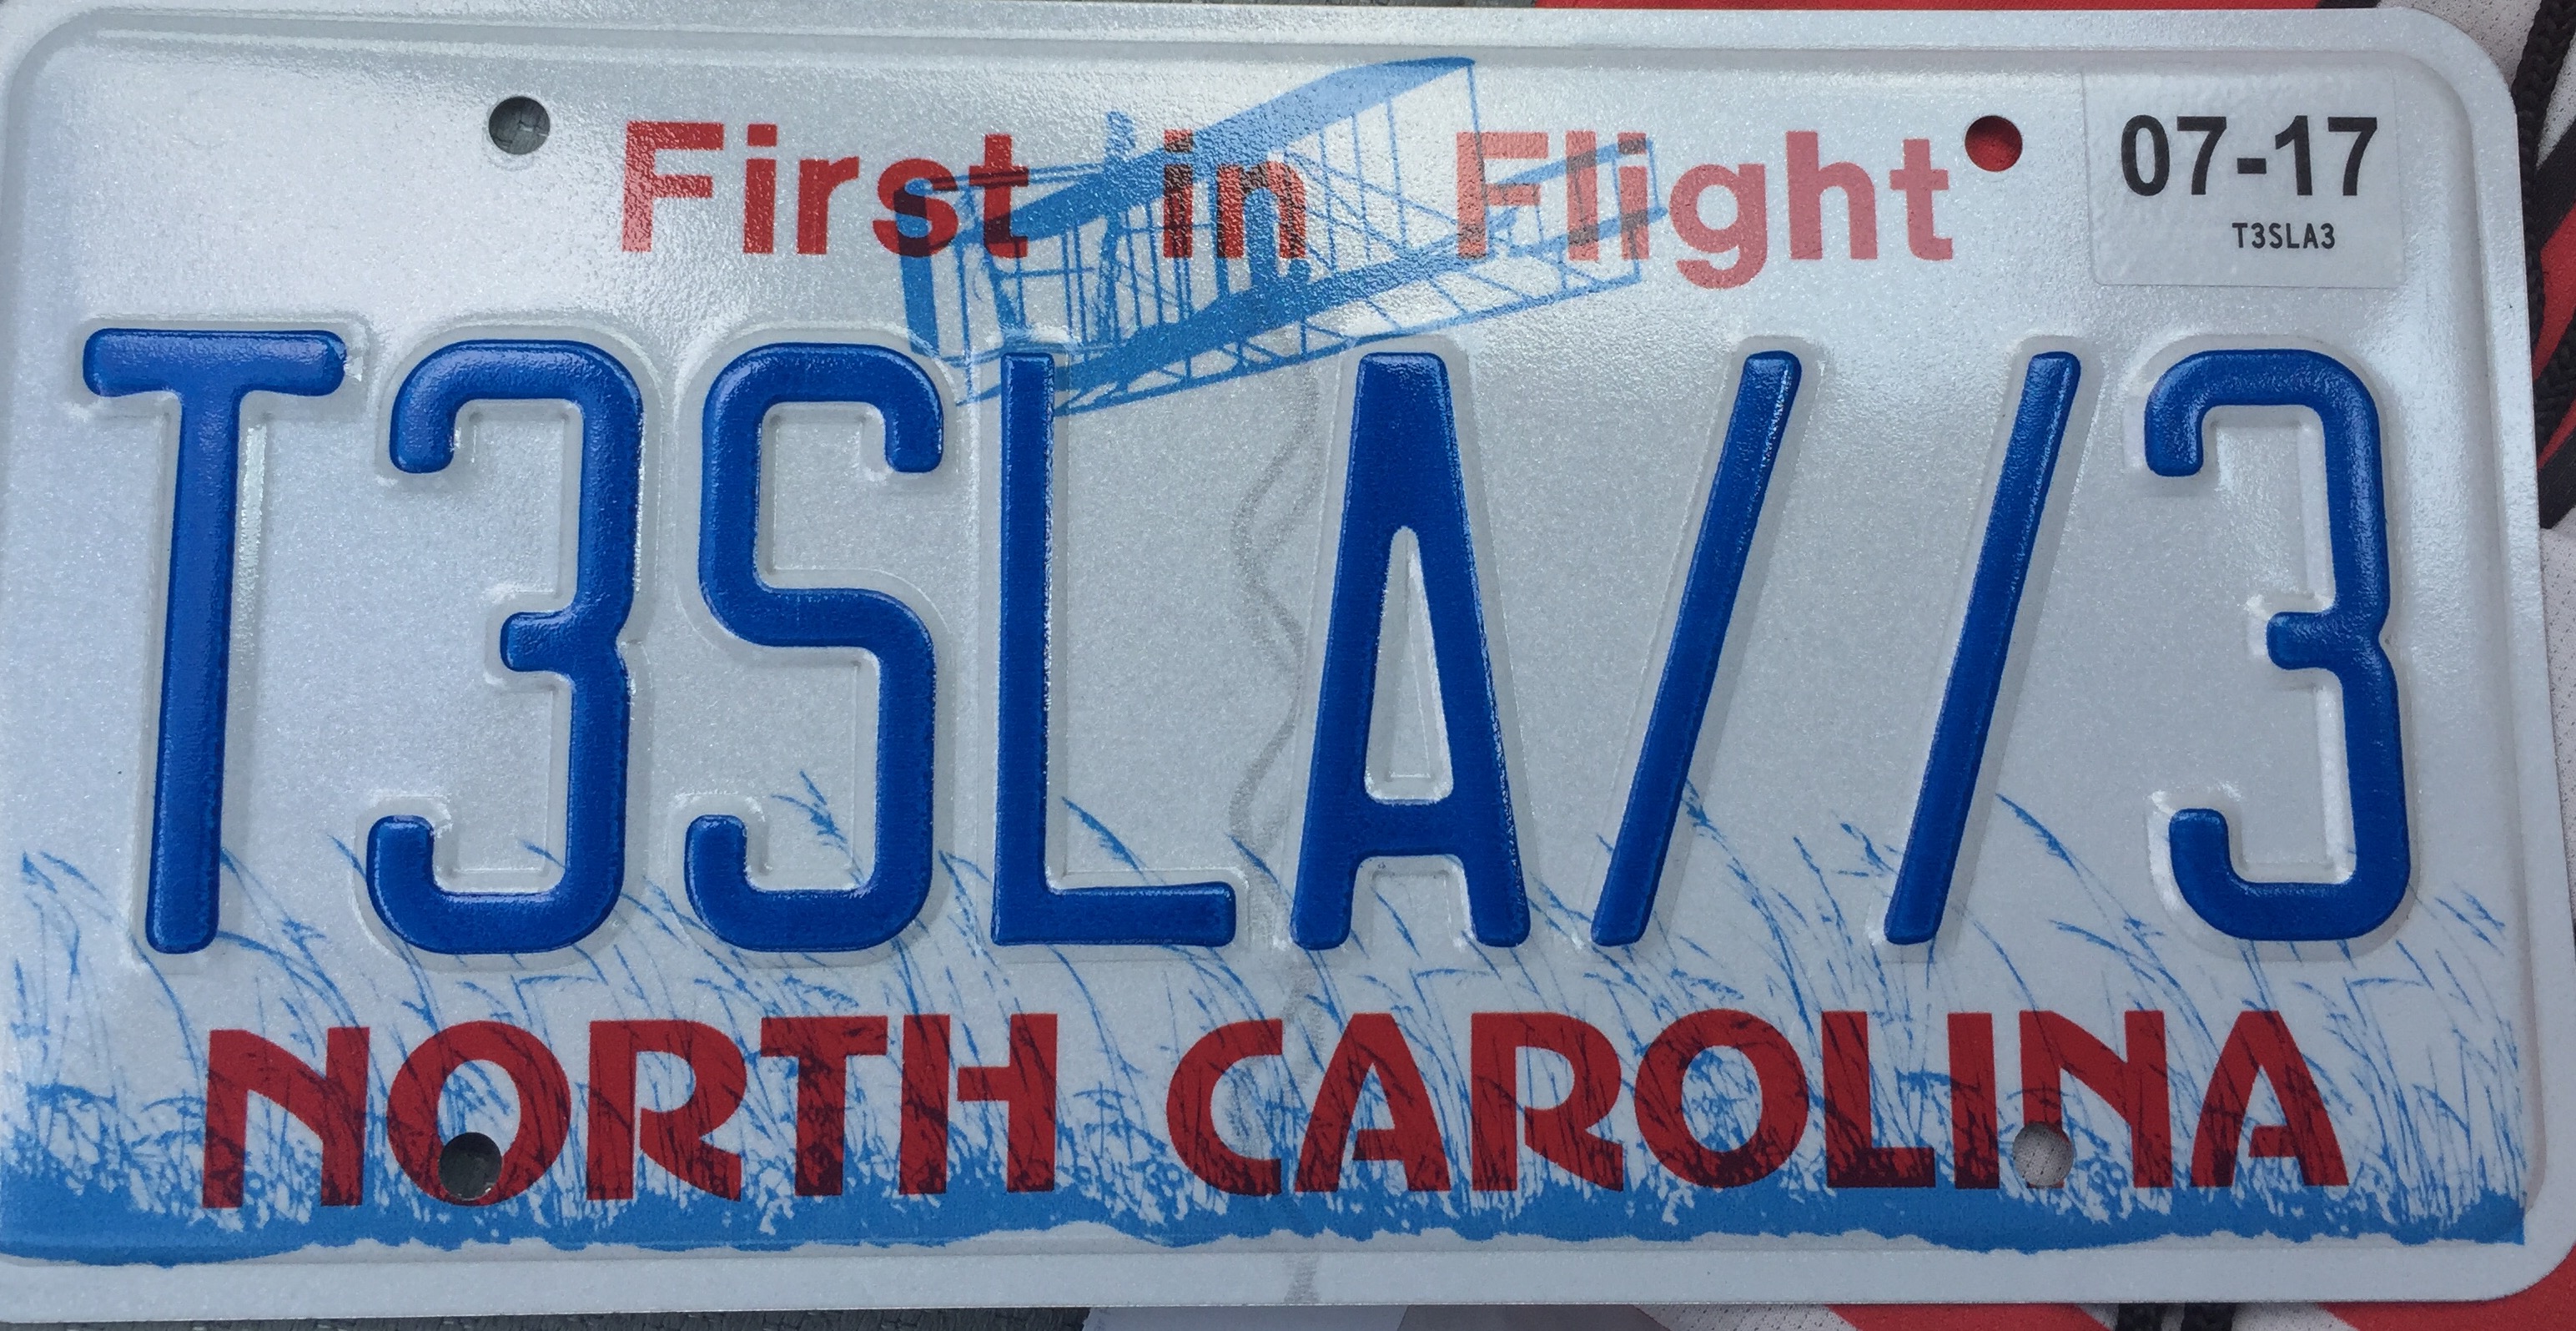 My NC Tesla plate